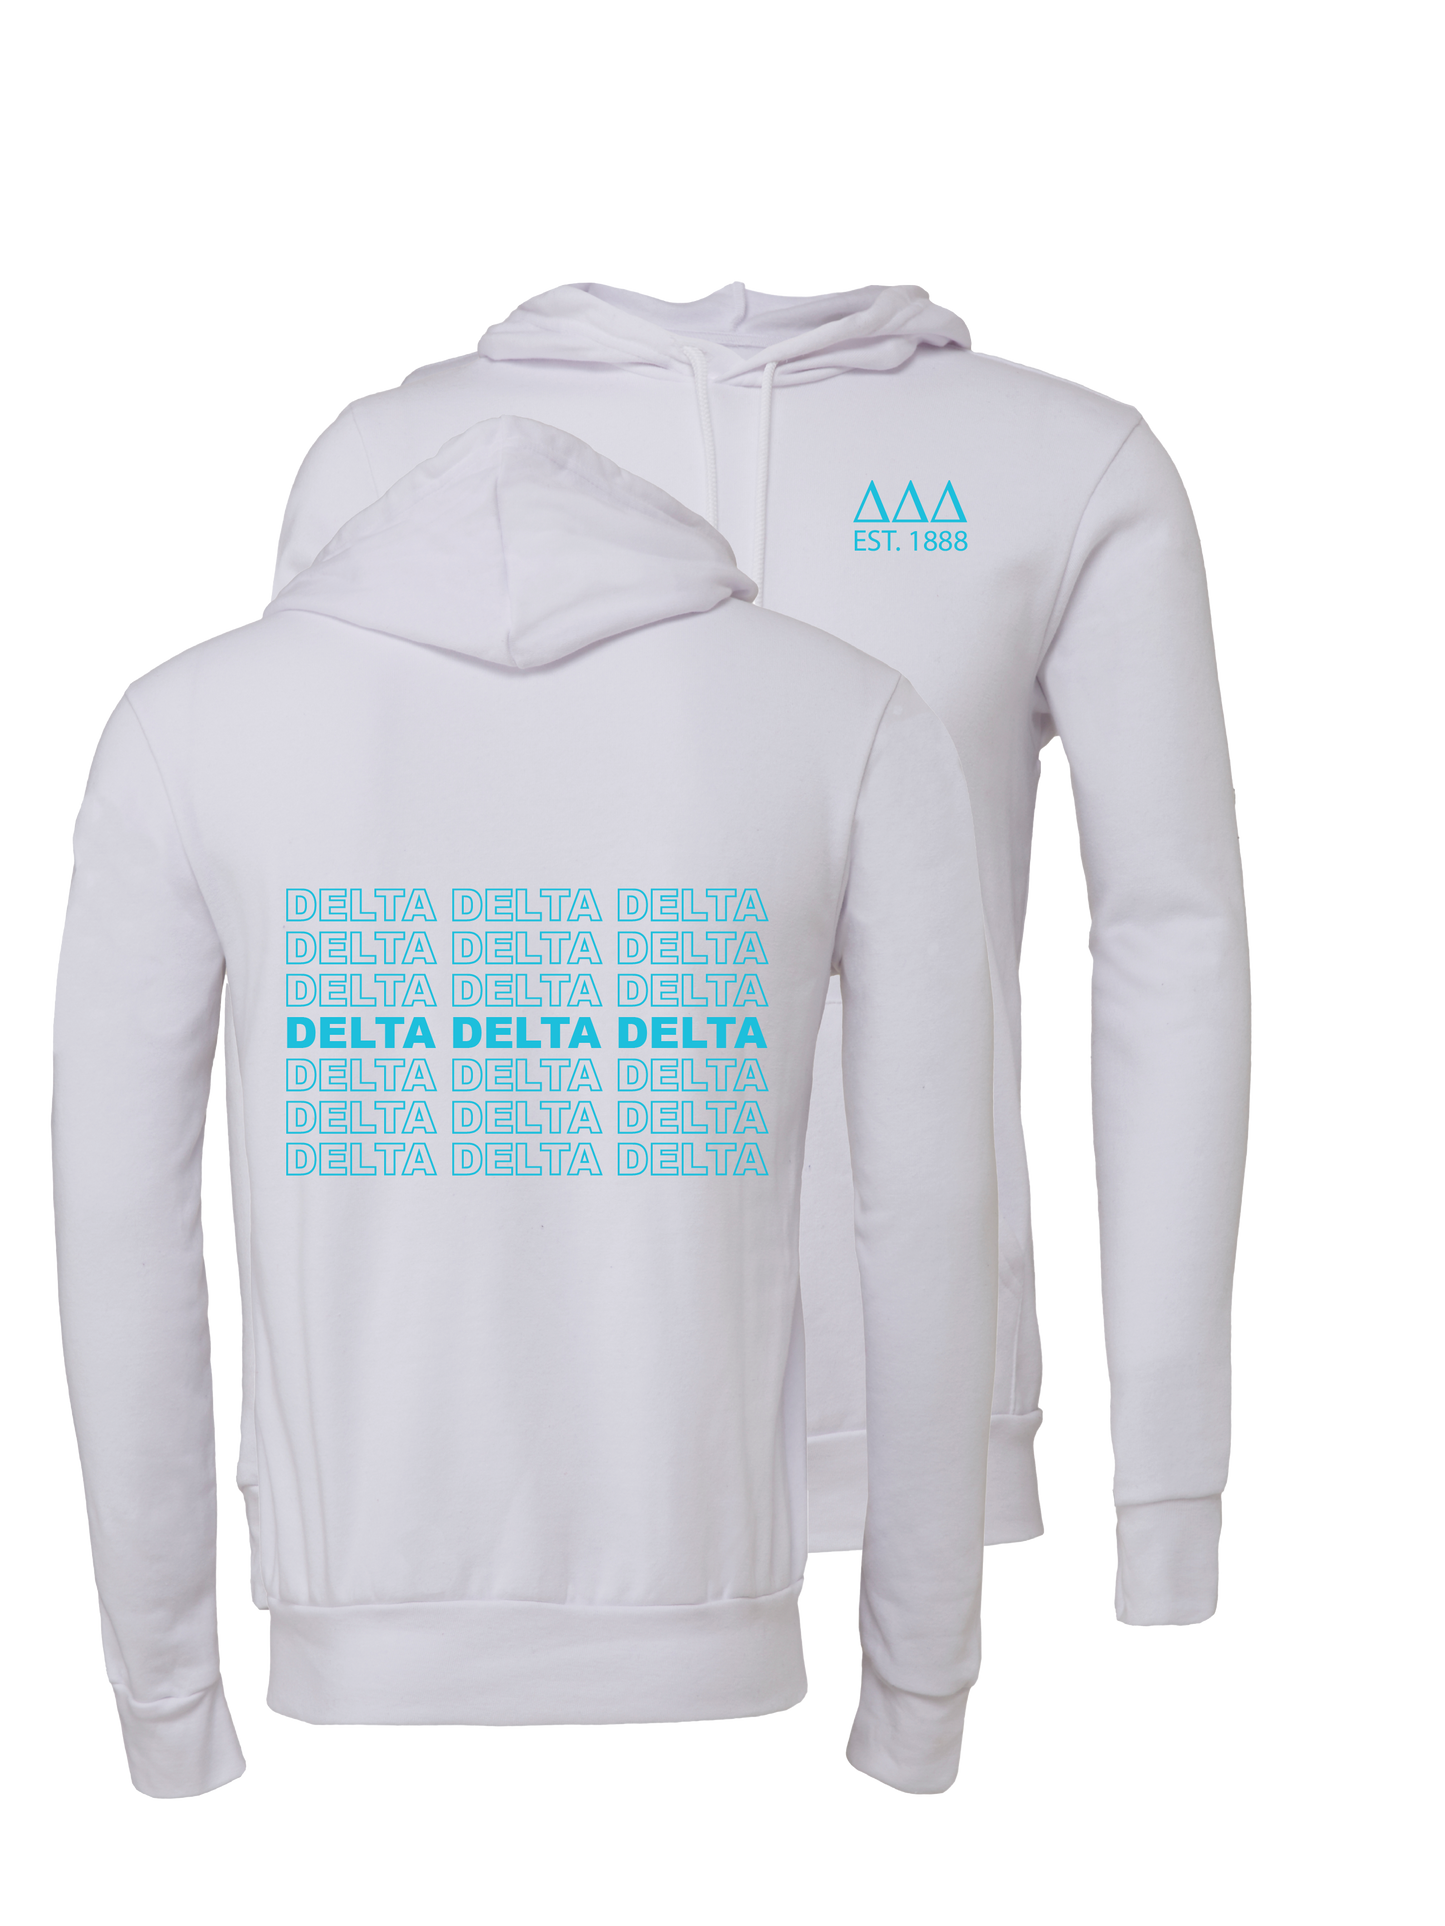 Delta Delta Delta Repeating Name Hooded Sweatshirts